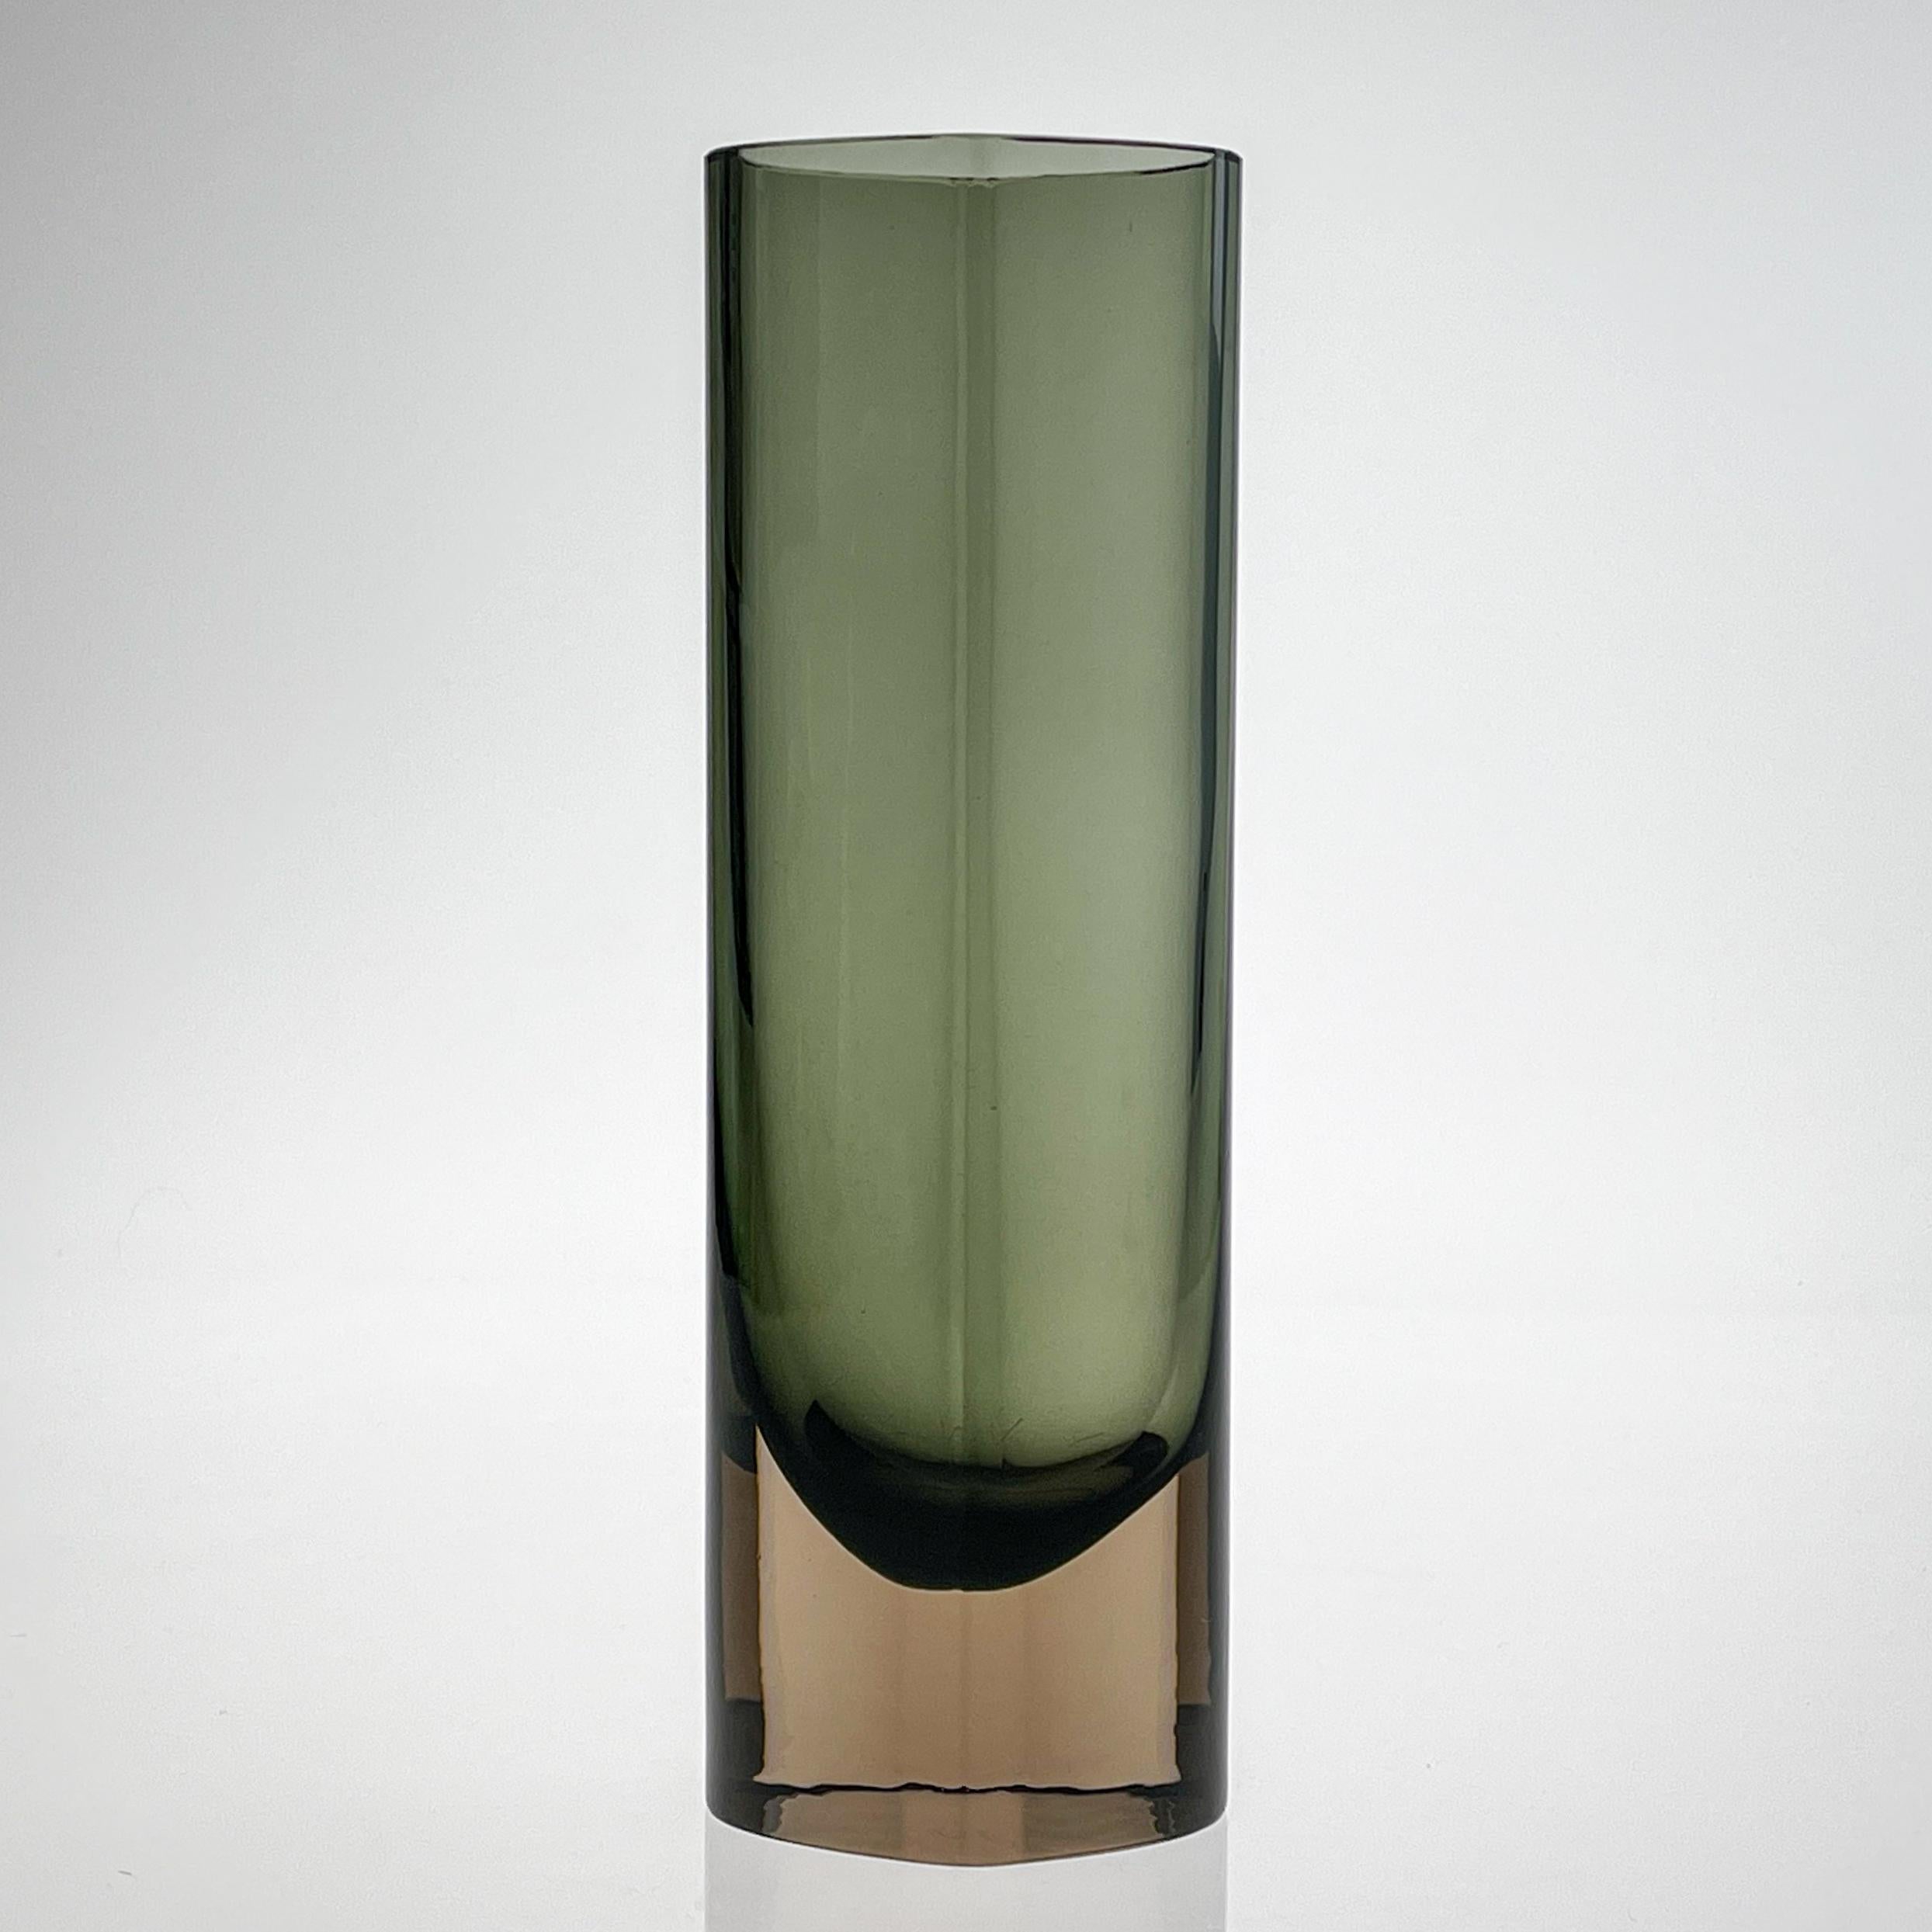 Finnish Scandinavian Modern Kaj Franck Art-Glass Vase Handblown Green Brown circa 1967 For Sale